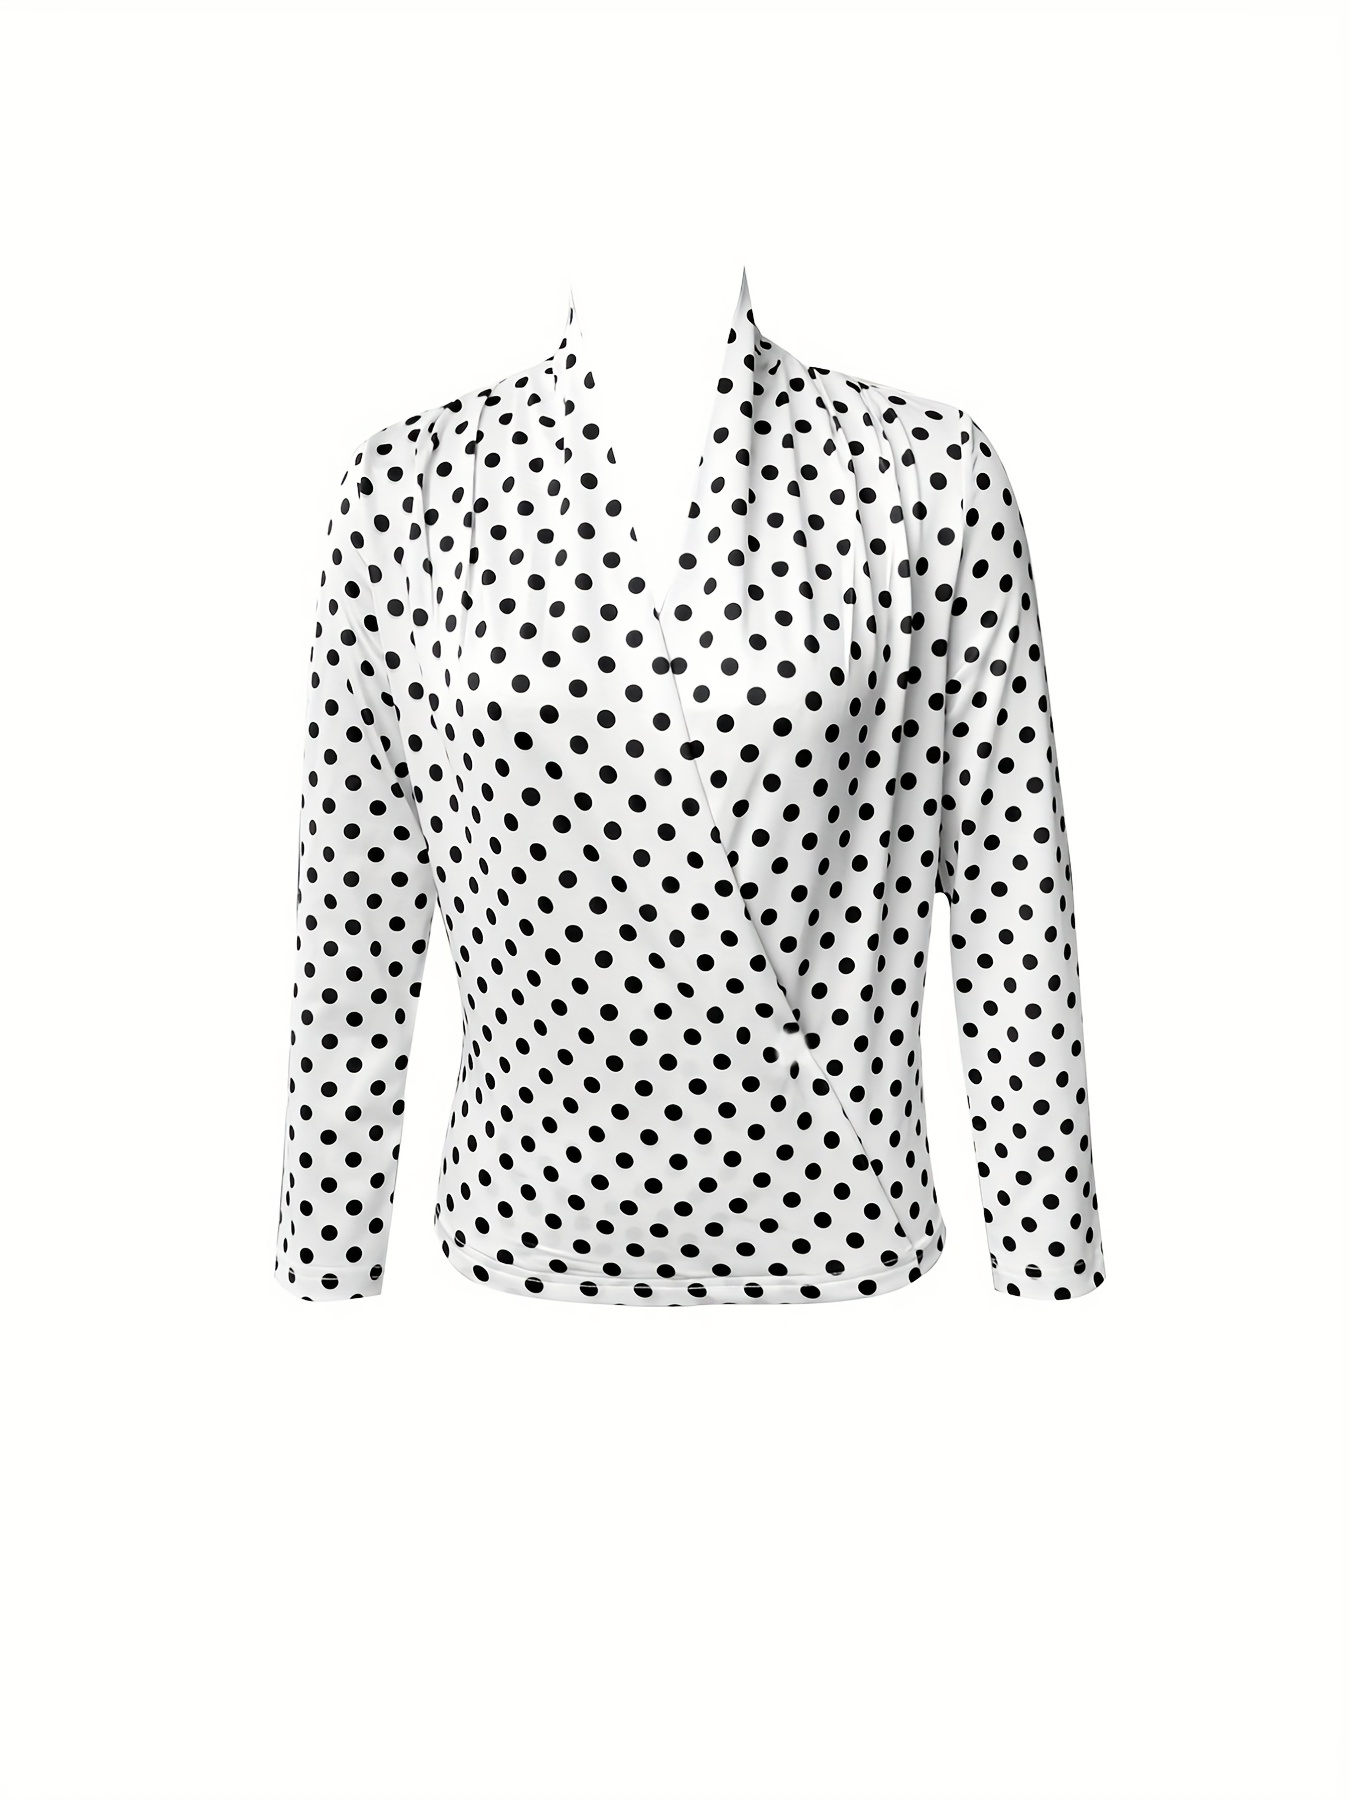 Women's Blouses Polka Dot V Neck Blouse Black and White L, Size: Large (8-10)